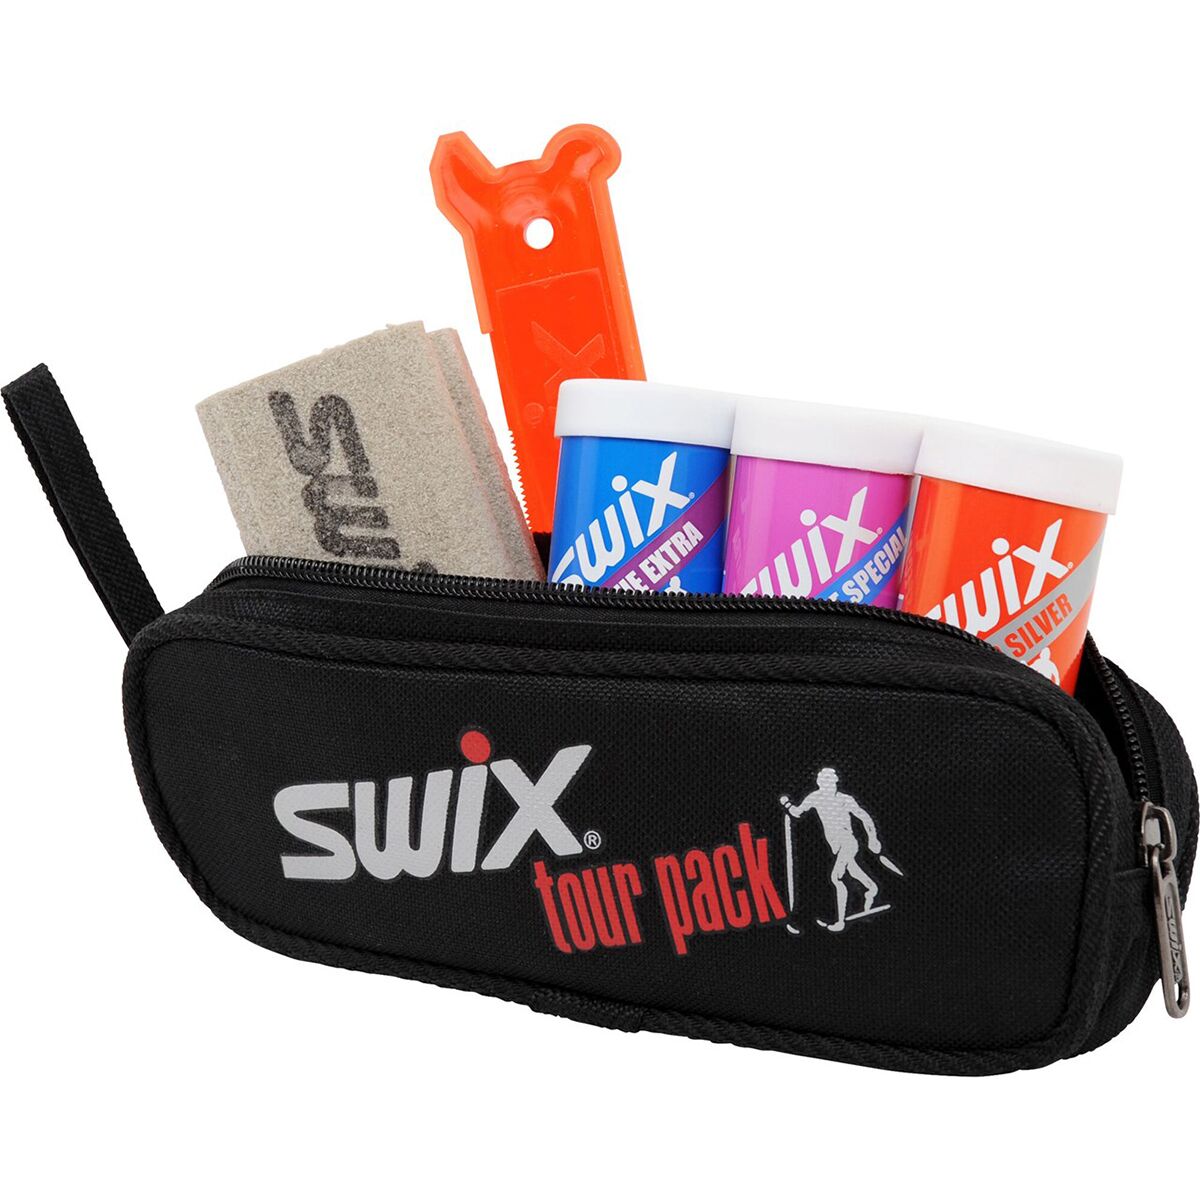 Swix Tour Pack Tour Pack